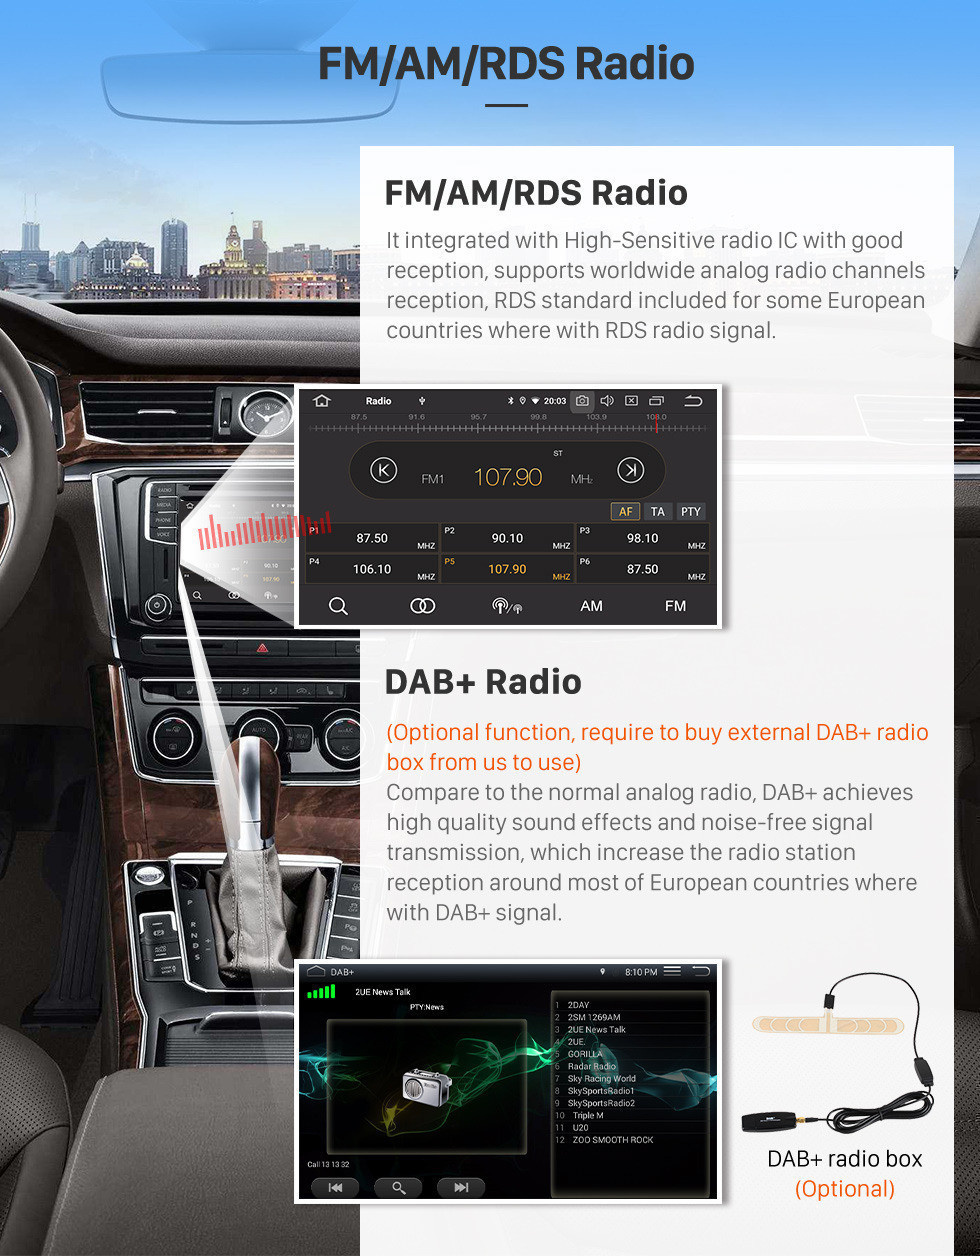 Seicane 10,1 Zoll GPS Navigationssystem Android 11.0 2019 Toyota Corolla Unterstützung Radio IPS Vollbild 3G WiFi Bluetooth OBD2 Lenkradsteuerung